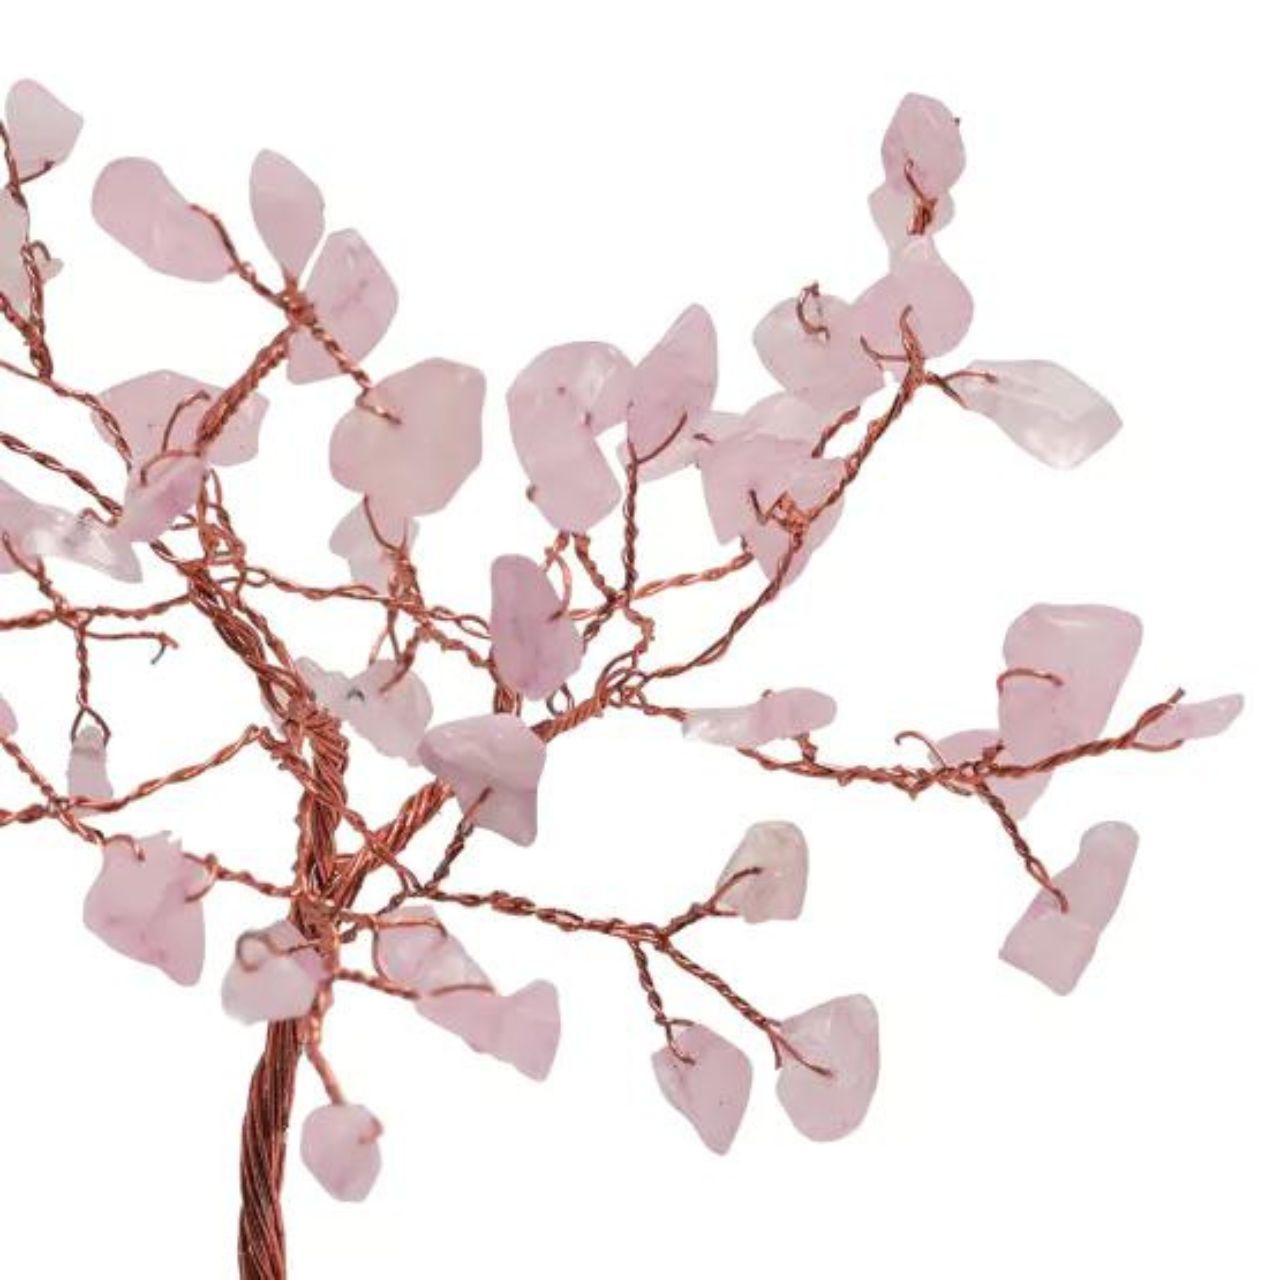 This vivid gemstone tree radiates positive energy around living spaces.